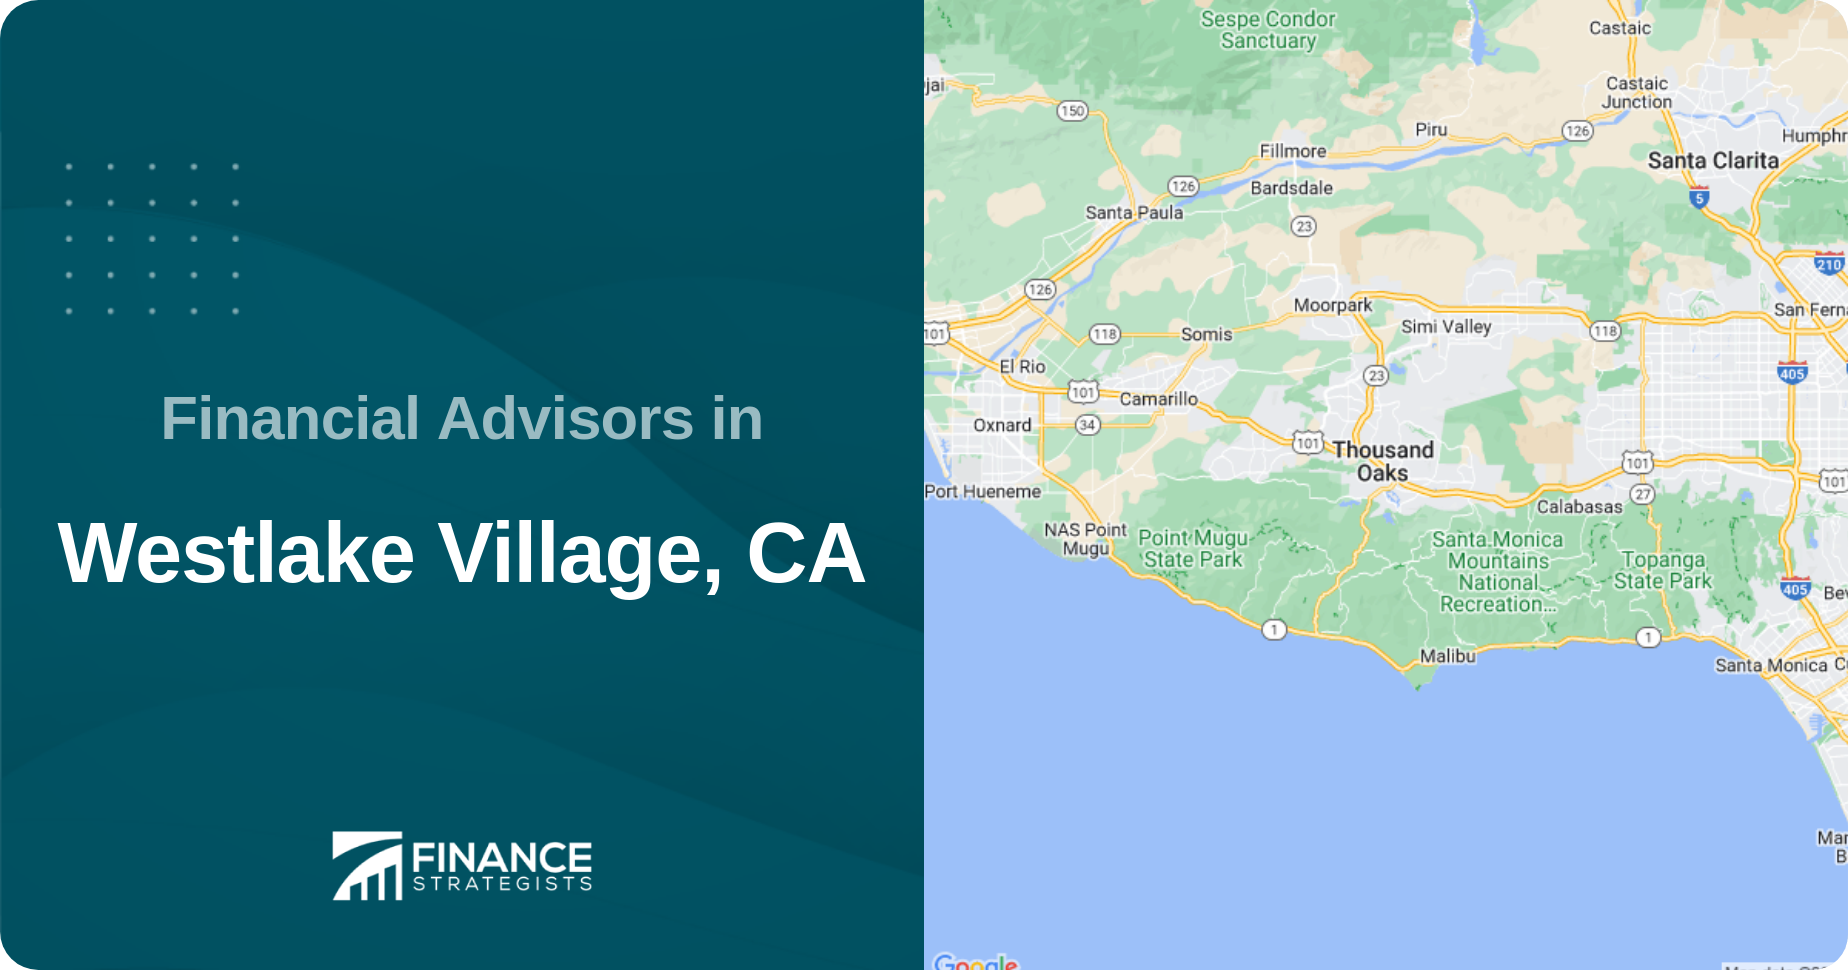 Financial Advisors in Westlake Village, CA